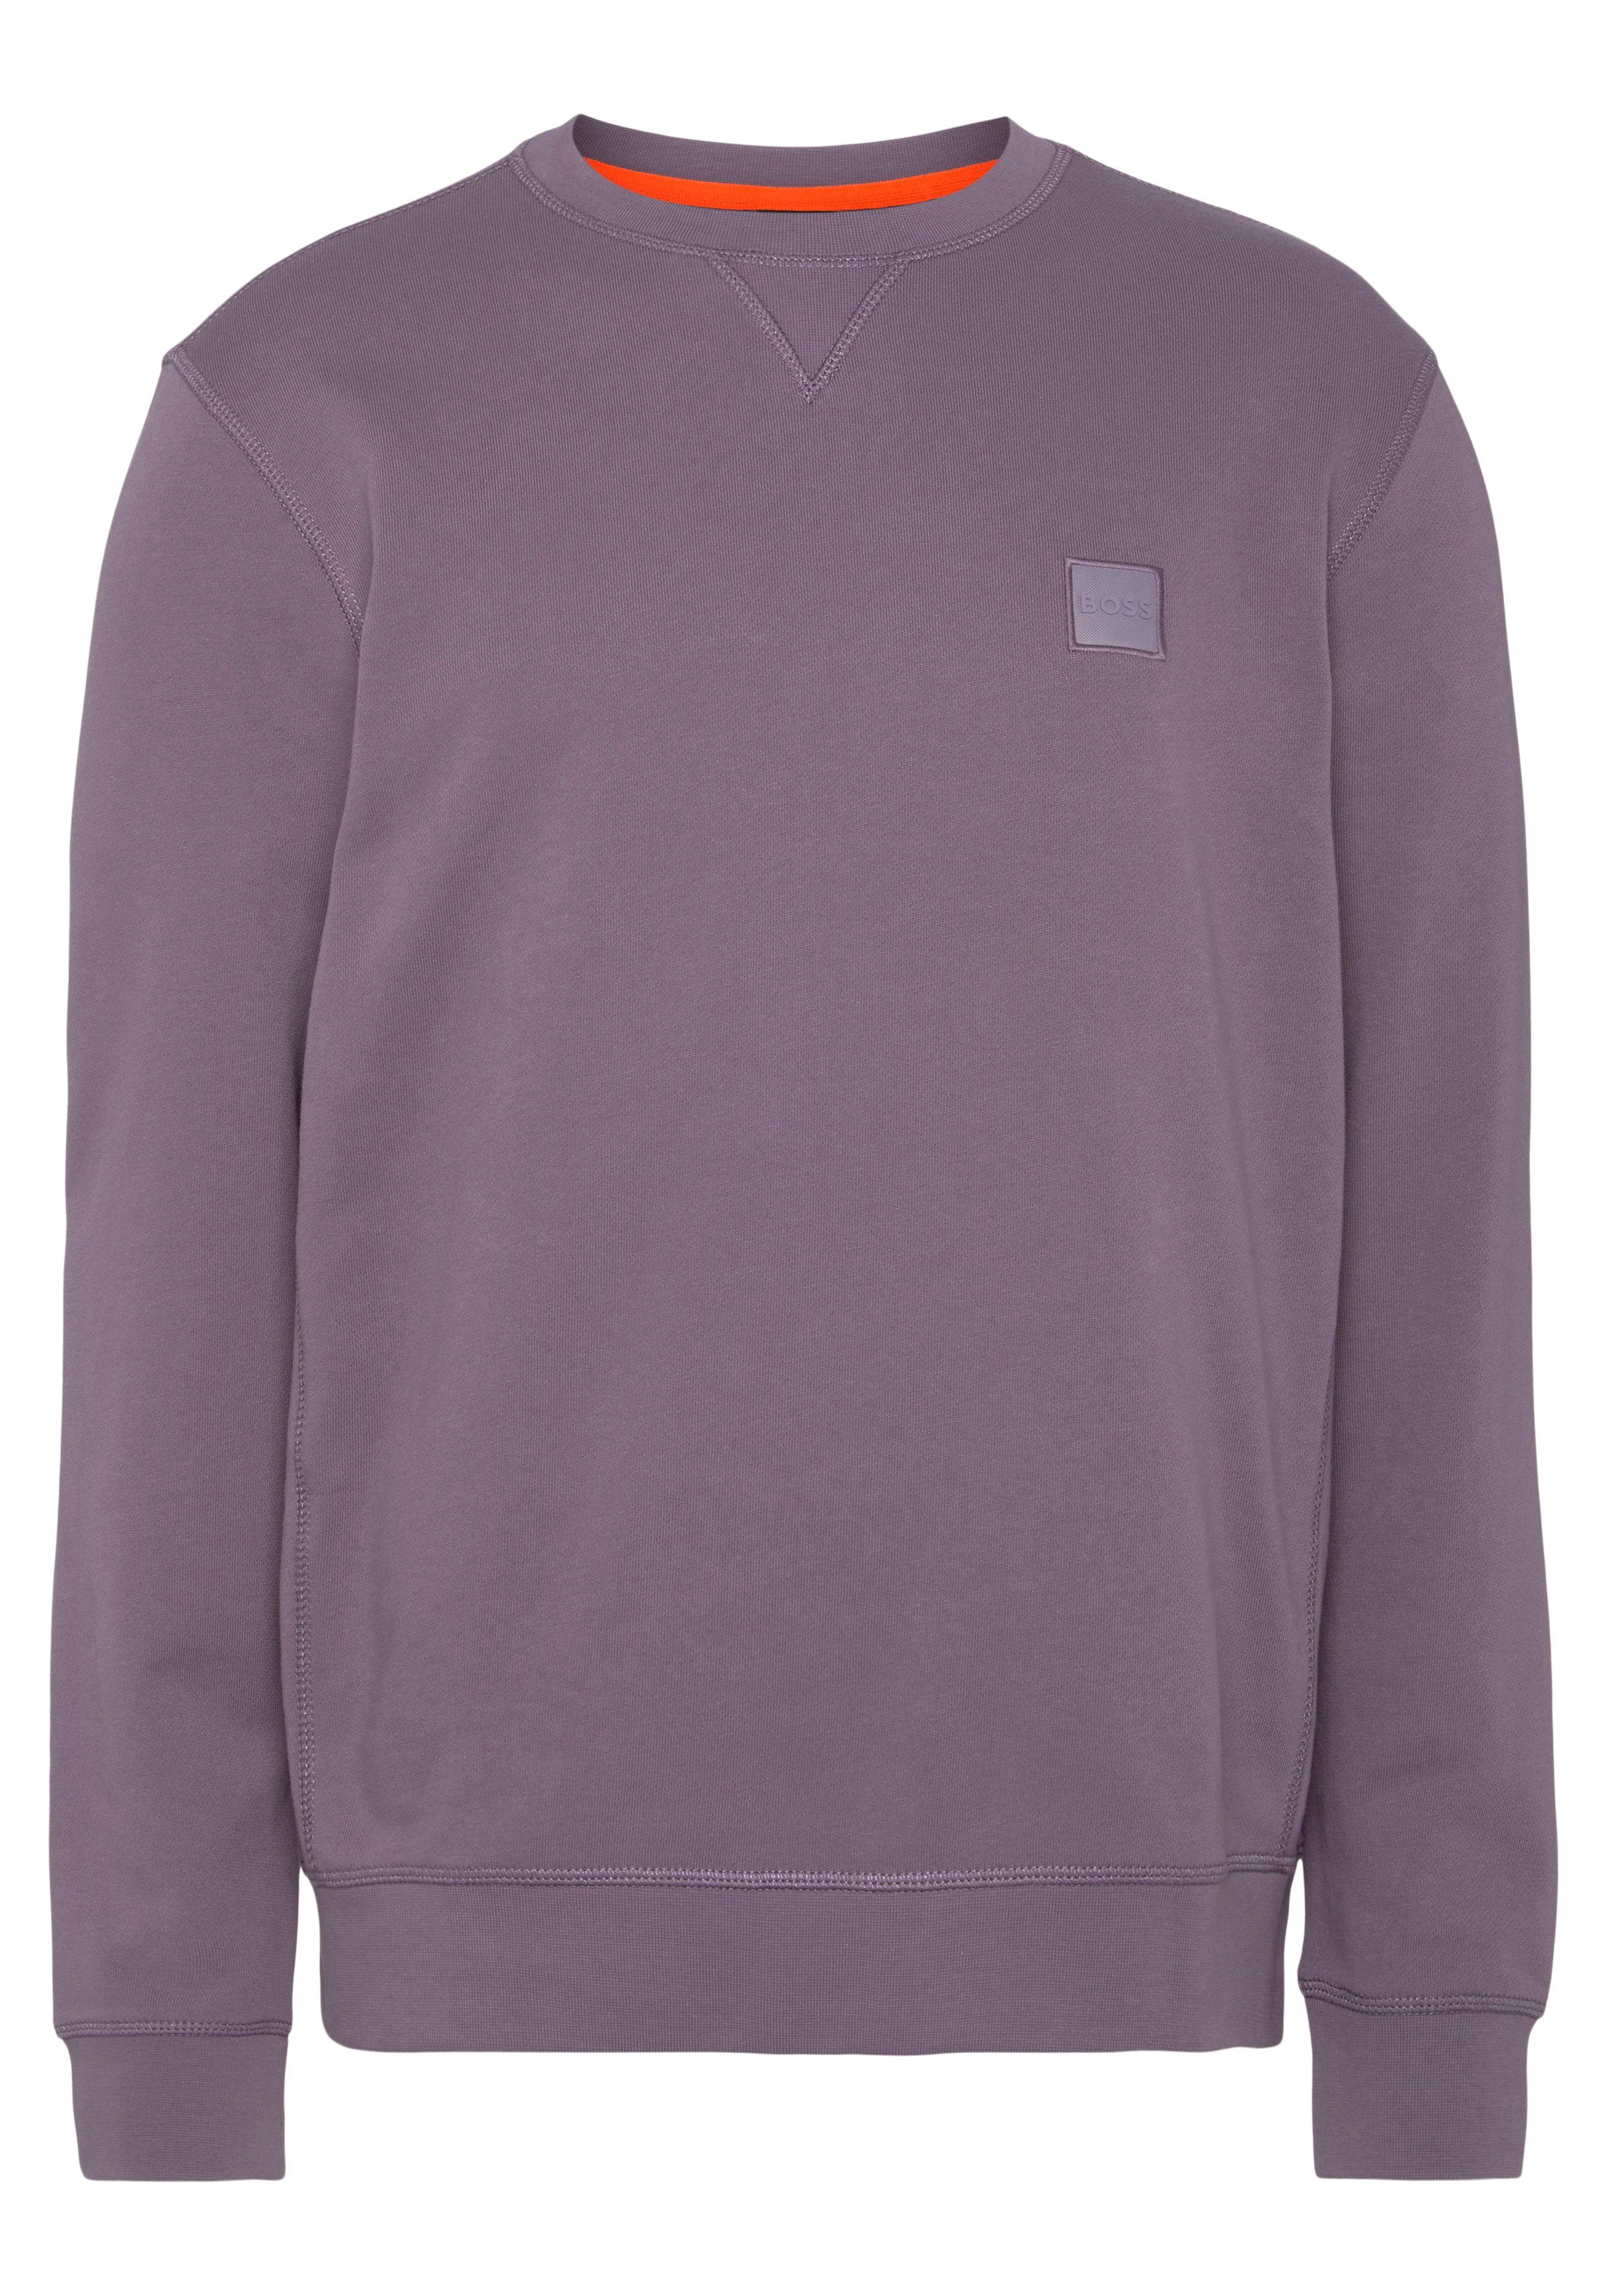 BOSS ORANGE Sweatshirt Westart mit aufgesticktem BOSS Logo Medium Purple511